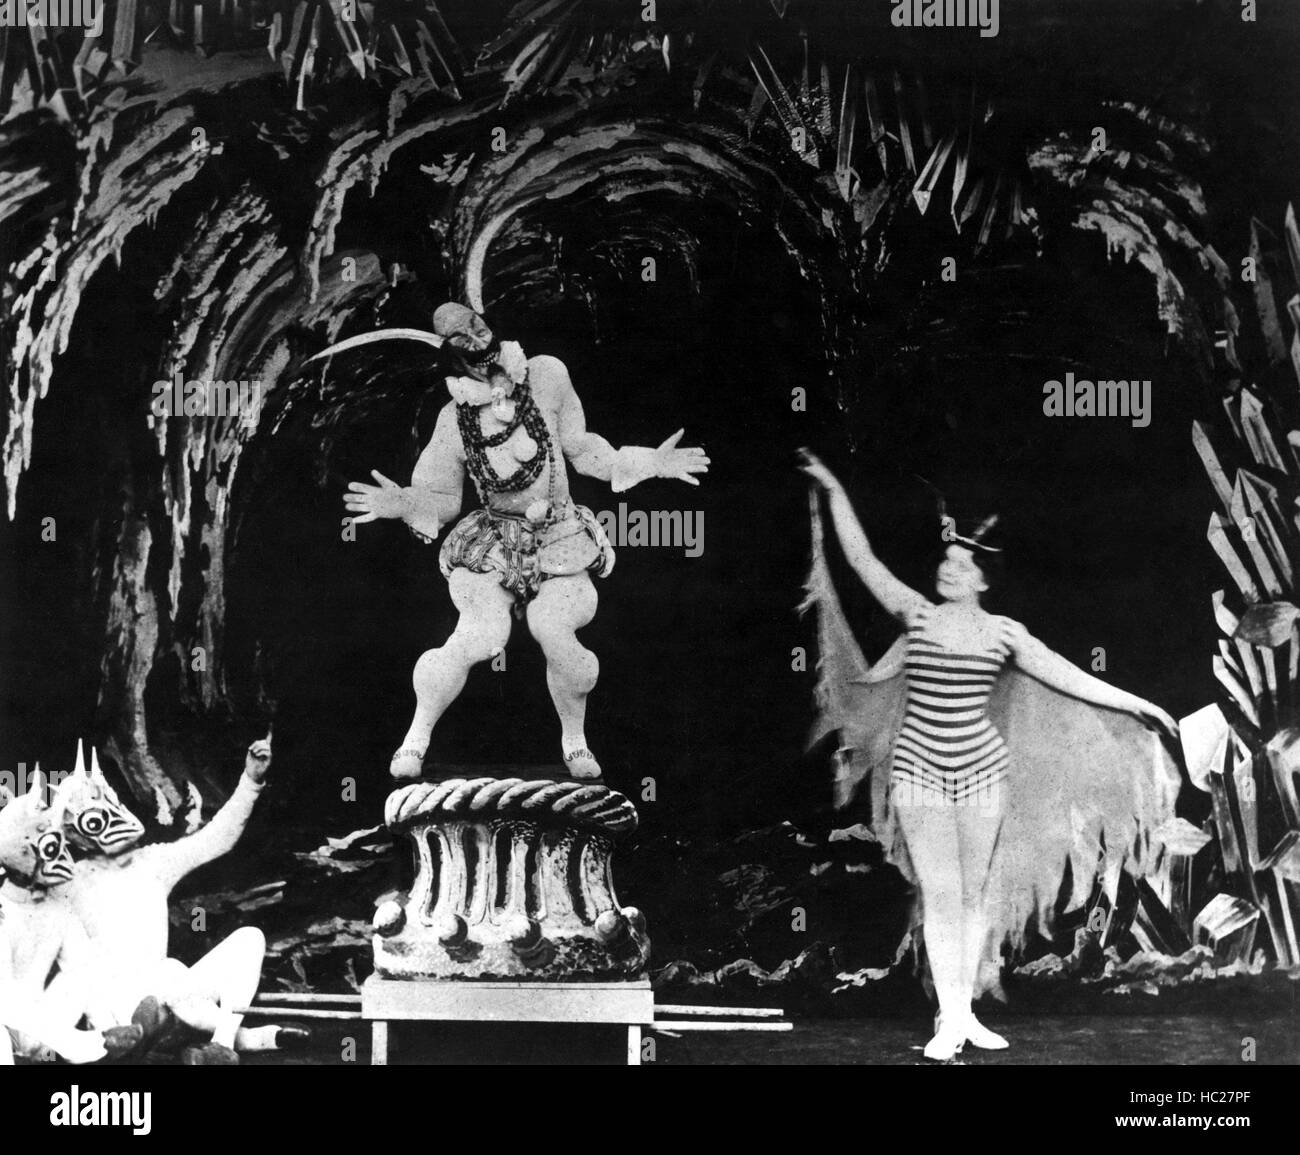 THE MERRY FROLIC OF SATAN, (aka LES QUATRE CENTS FARCES DU DIABLE, aka THE 400 TRICKS OF THE DEVIL), Georges Melies, 1906 Stock Photo